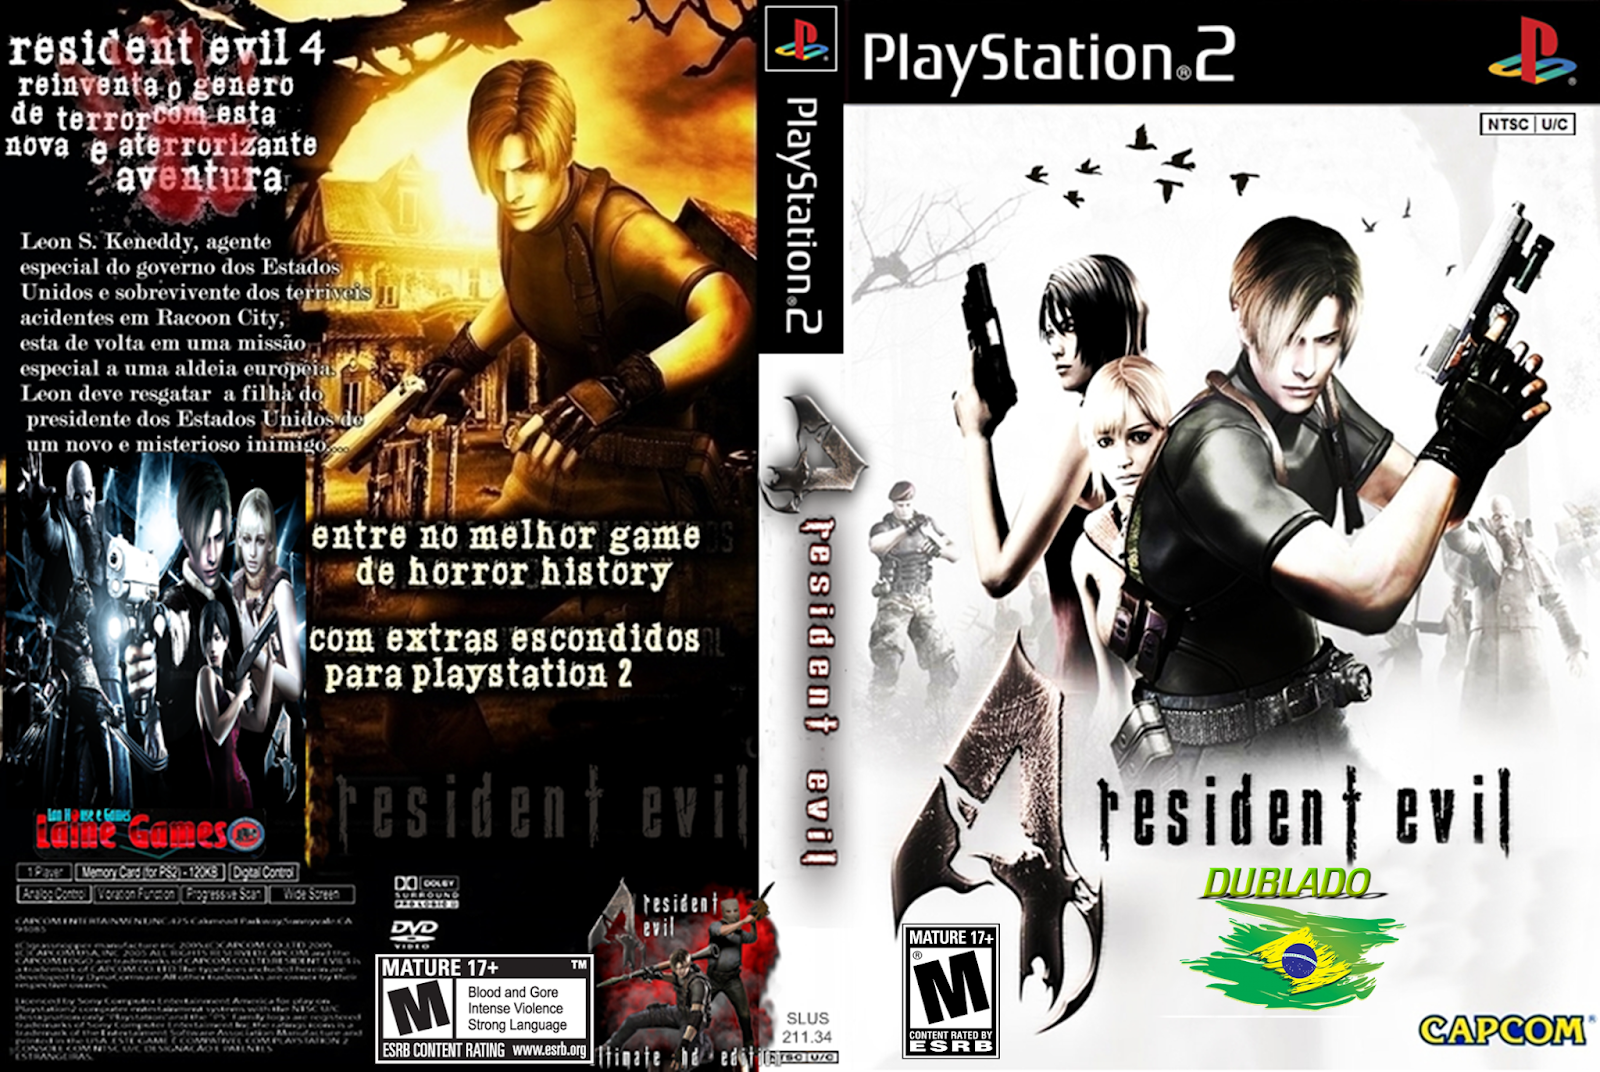 Резидент на пс 2. Resident Evil 4 ps2 диск. Resident Evil 4 ps2 DVD. Resident Evil 2 PS диск.